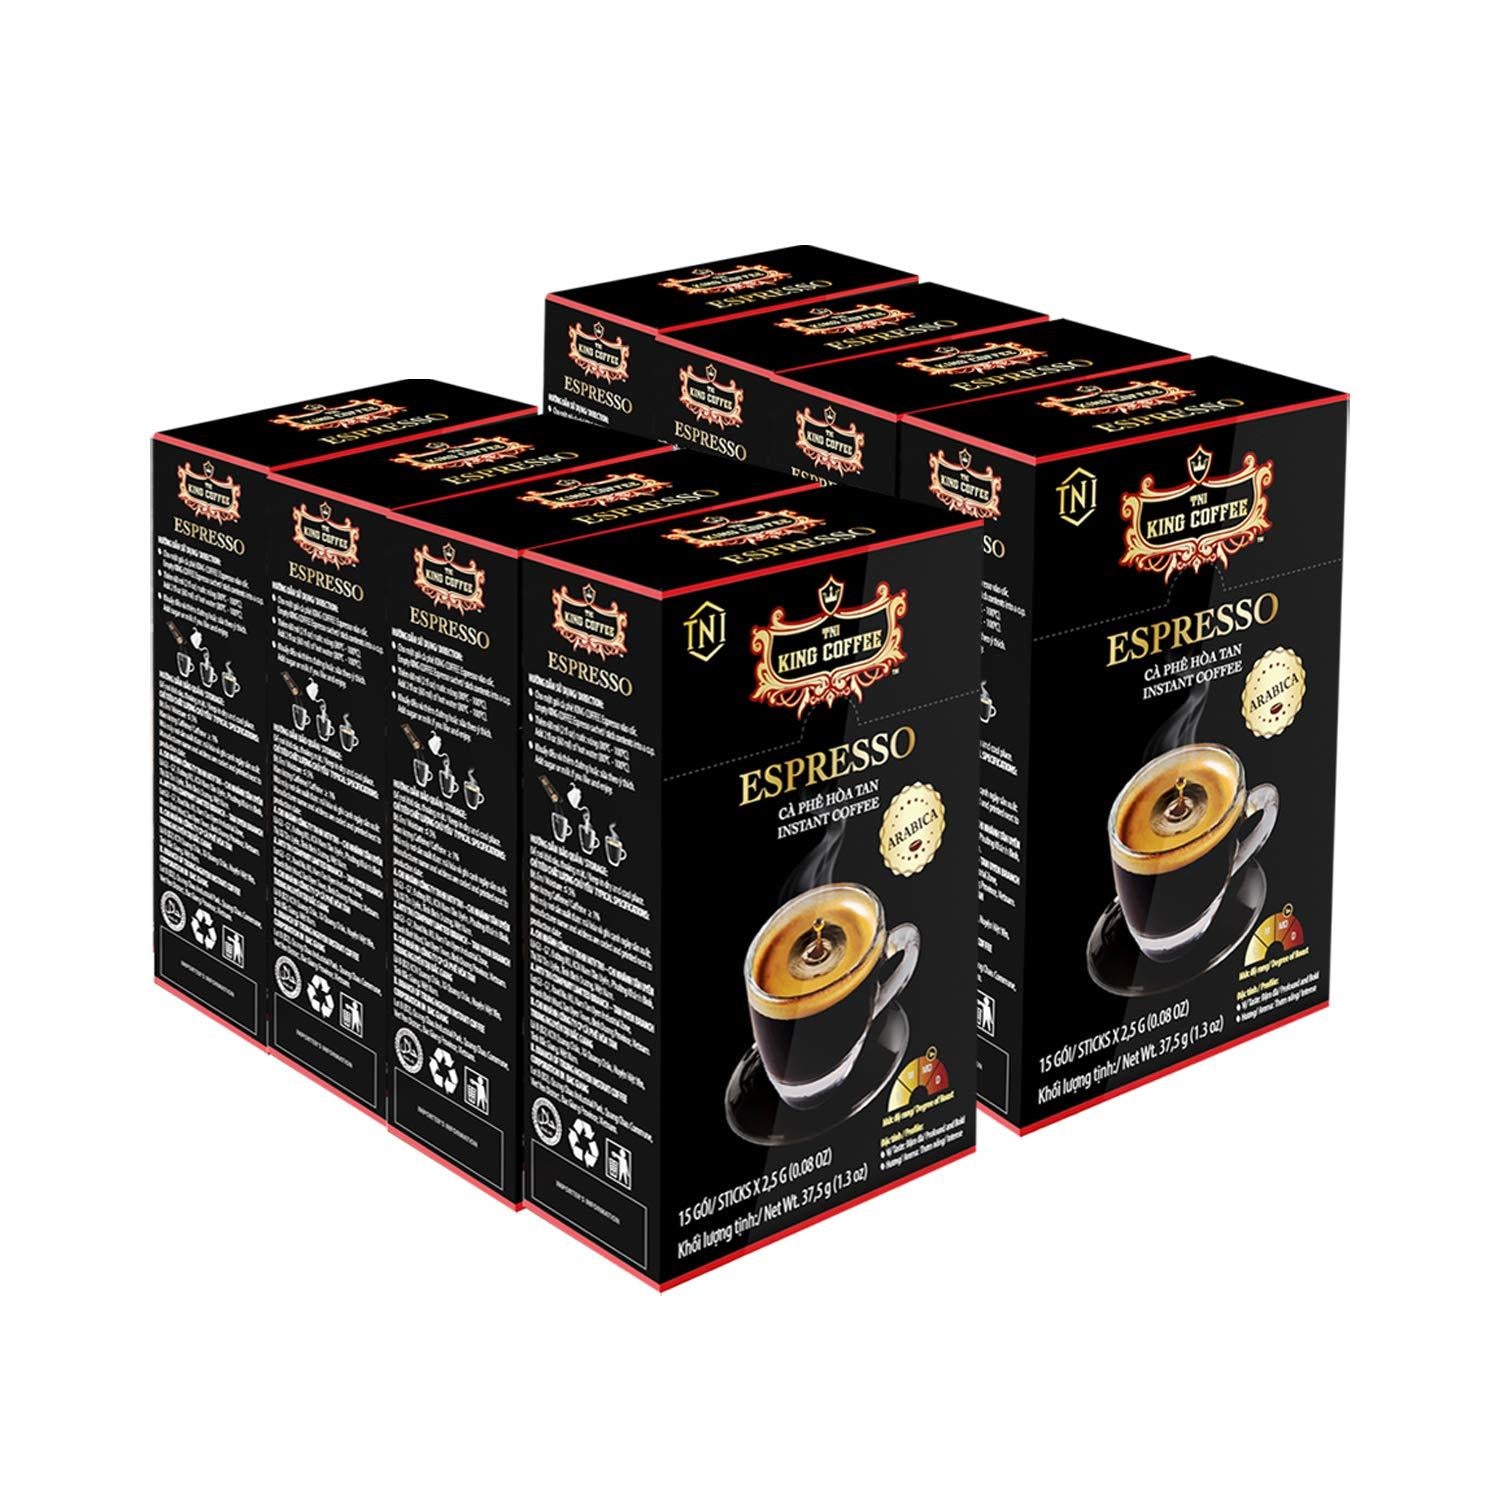 King Coffee Espresso Instant Vietnamese Coffee Arabica Instant Mix Medium Roast 15 sticks per box x 2.5g - Pack of 8